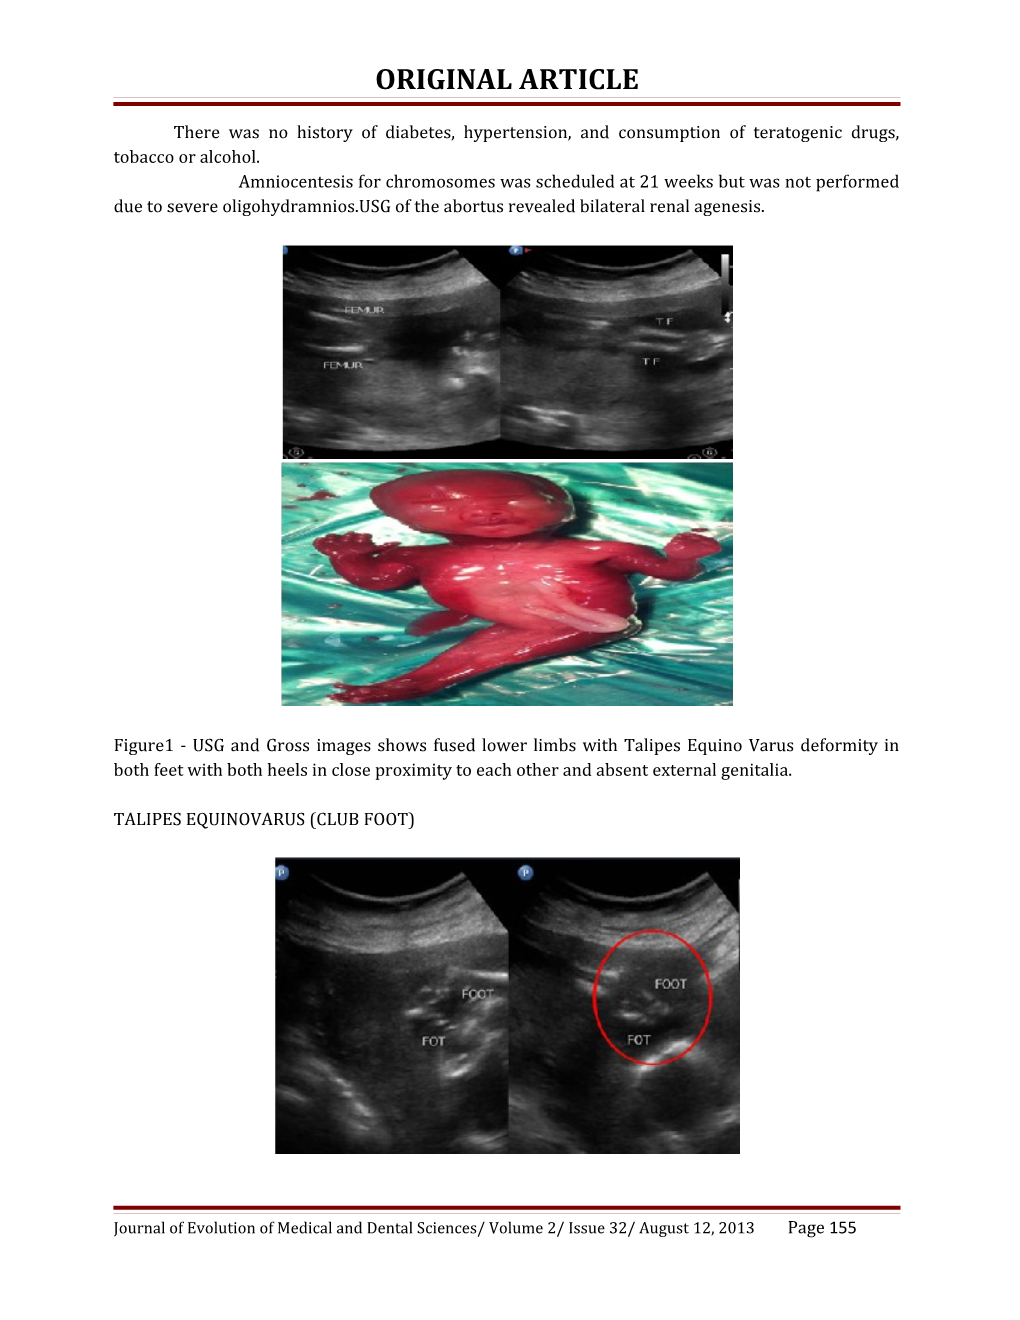 Sirenomelia: a Rare Congenital Anamoly